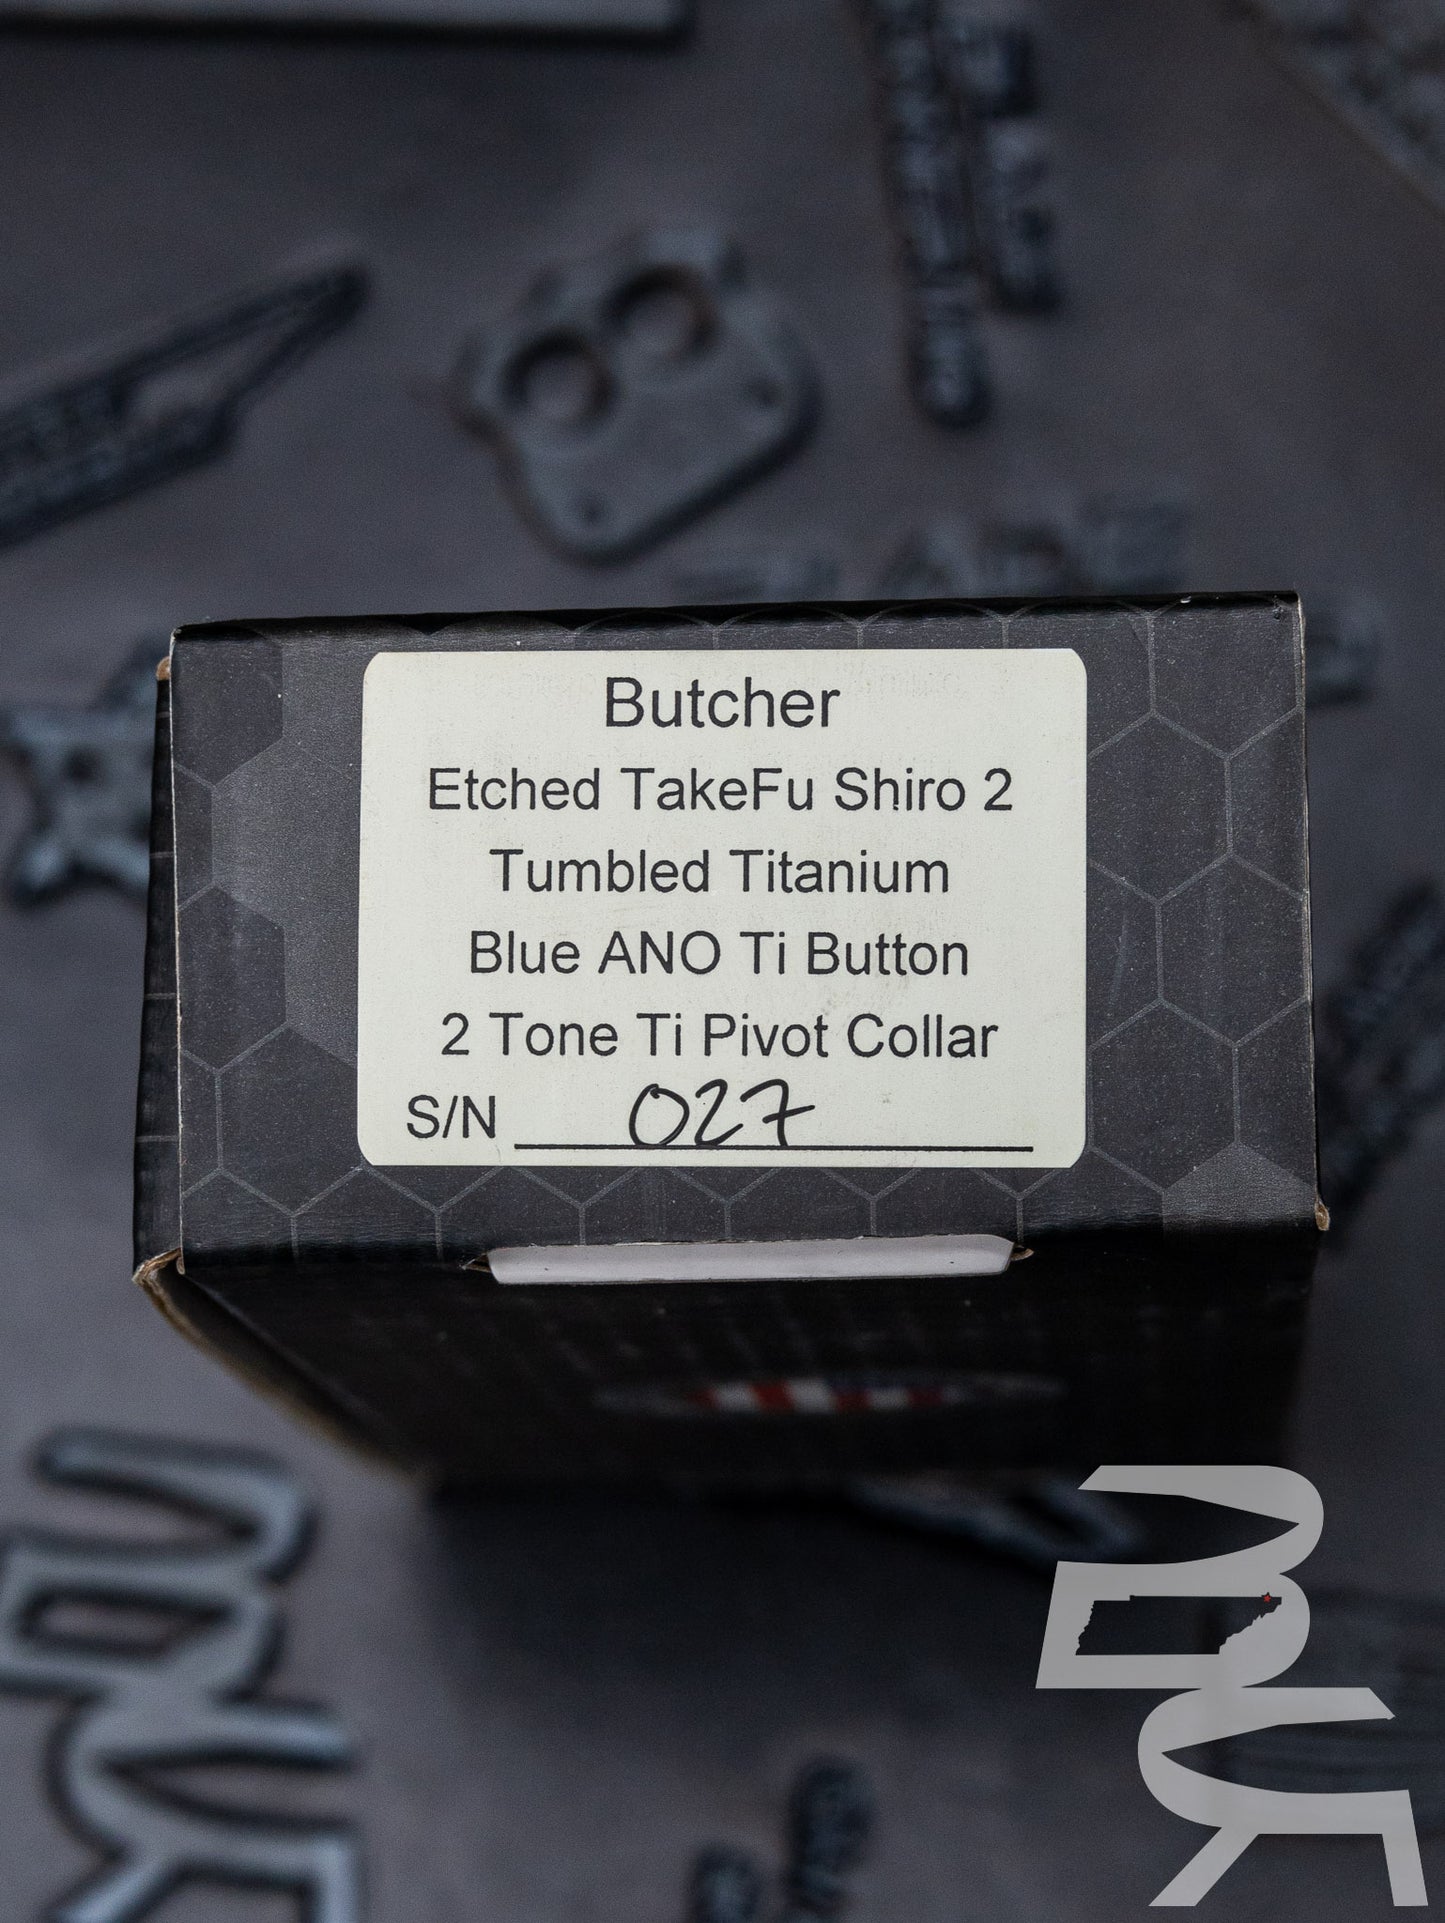 Pre Owned Heretic Butcher Auto - TakeFu Shiro 2 Tumbled Titanium Blue Ano TI Button 2 Tone Pivot Collar SN:027